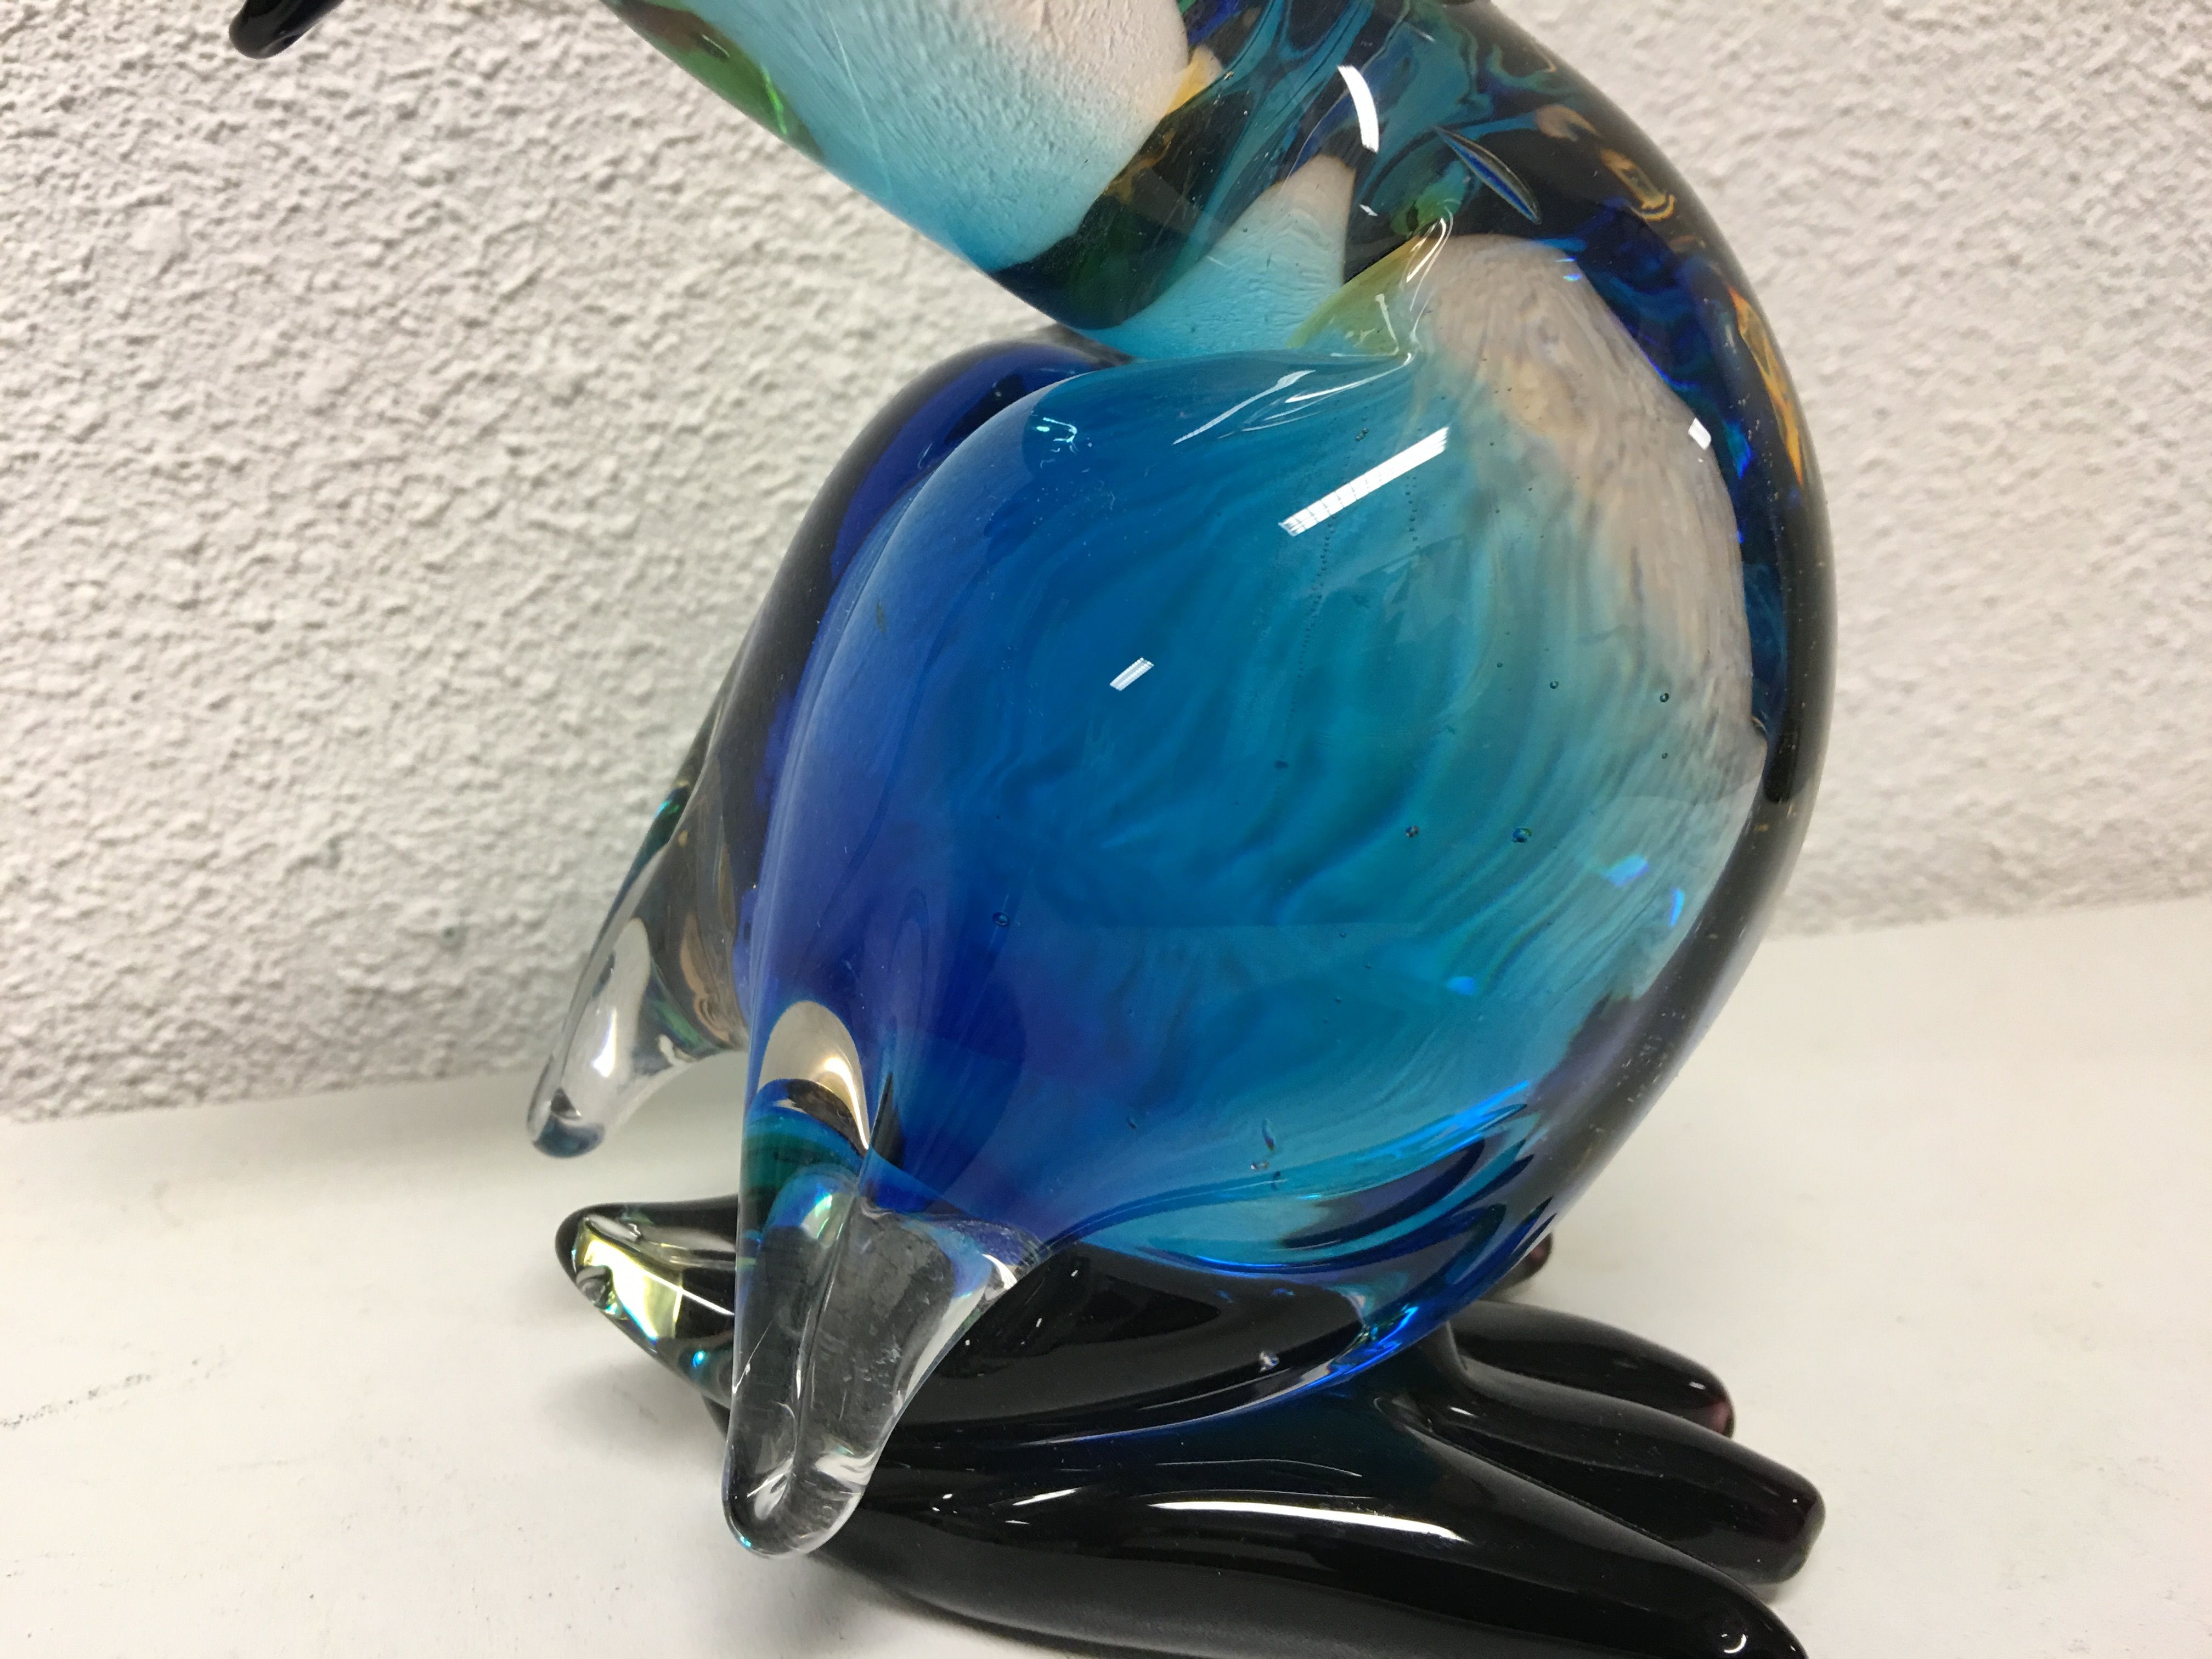 Prachtige glas-geblazen pelikaan, vol in kleur.